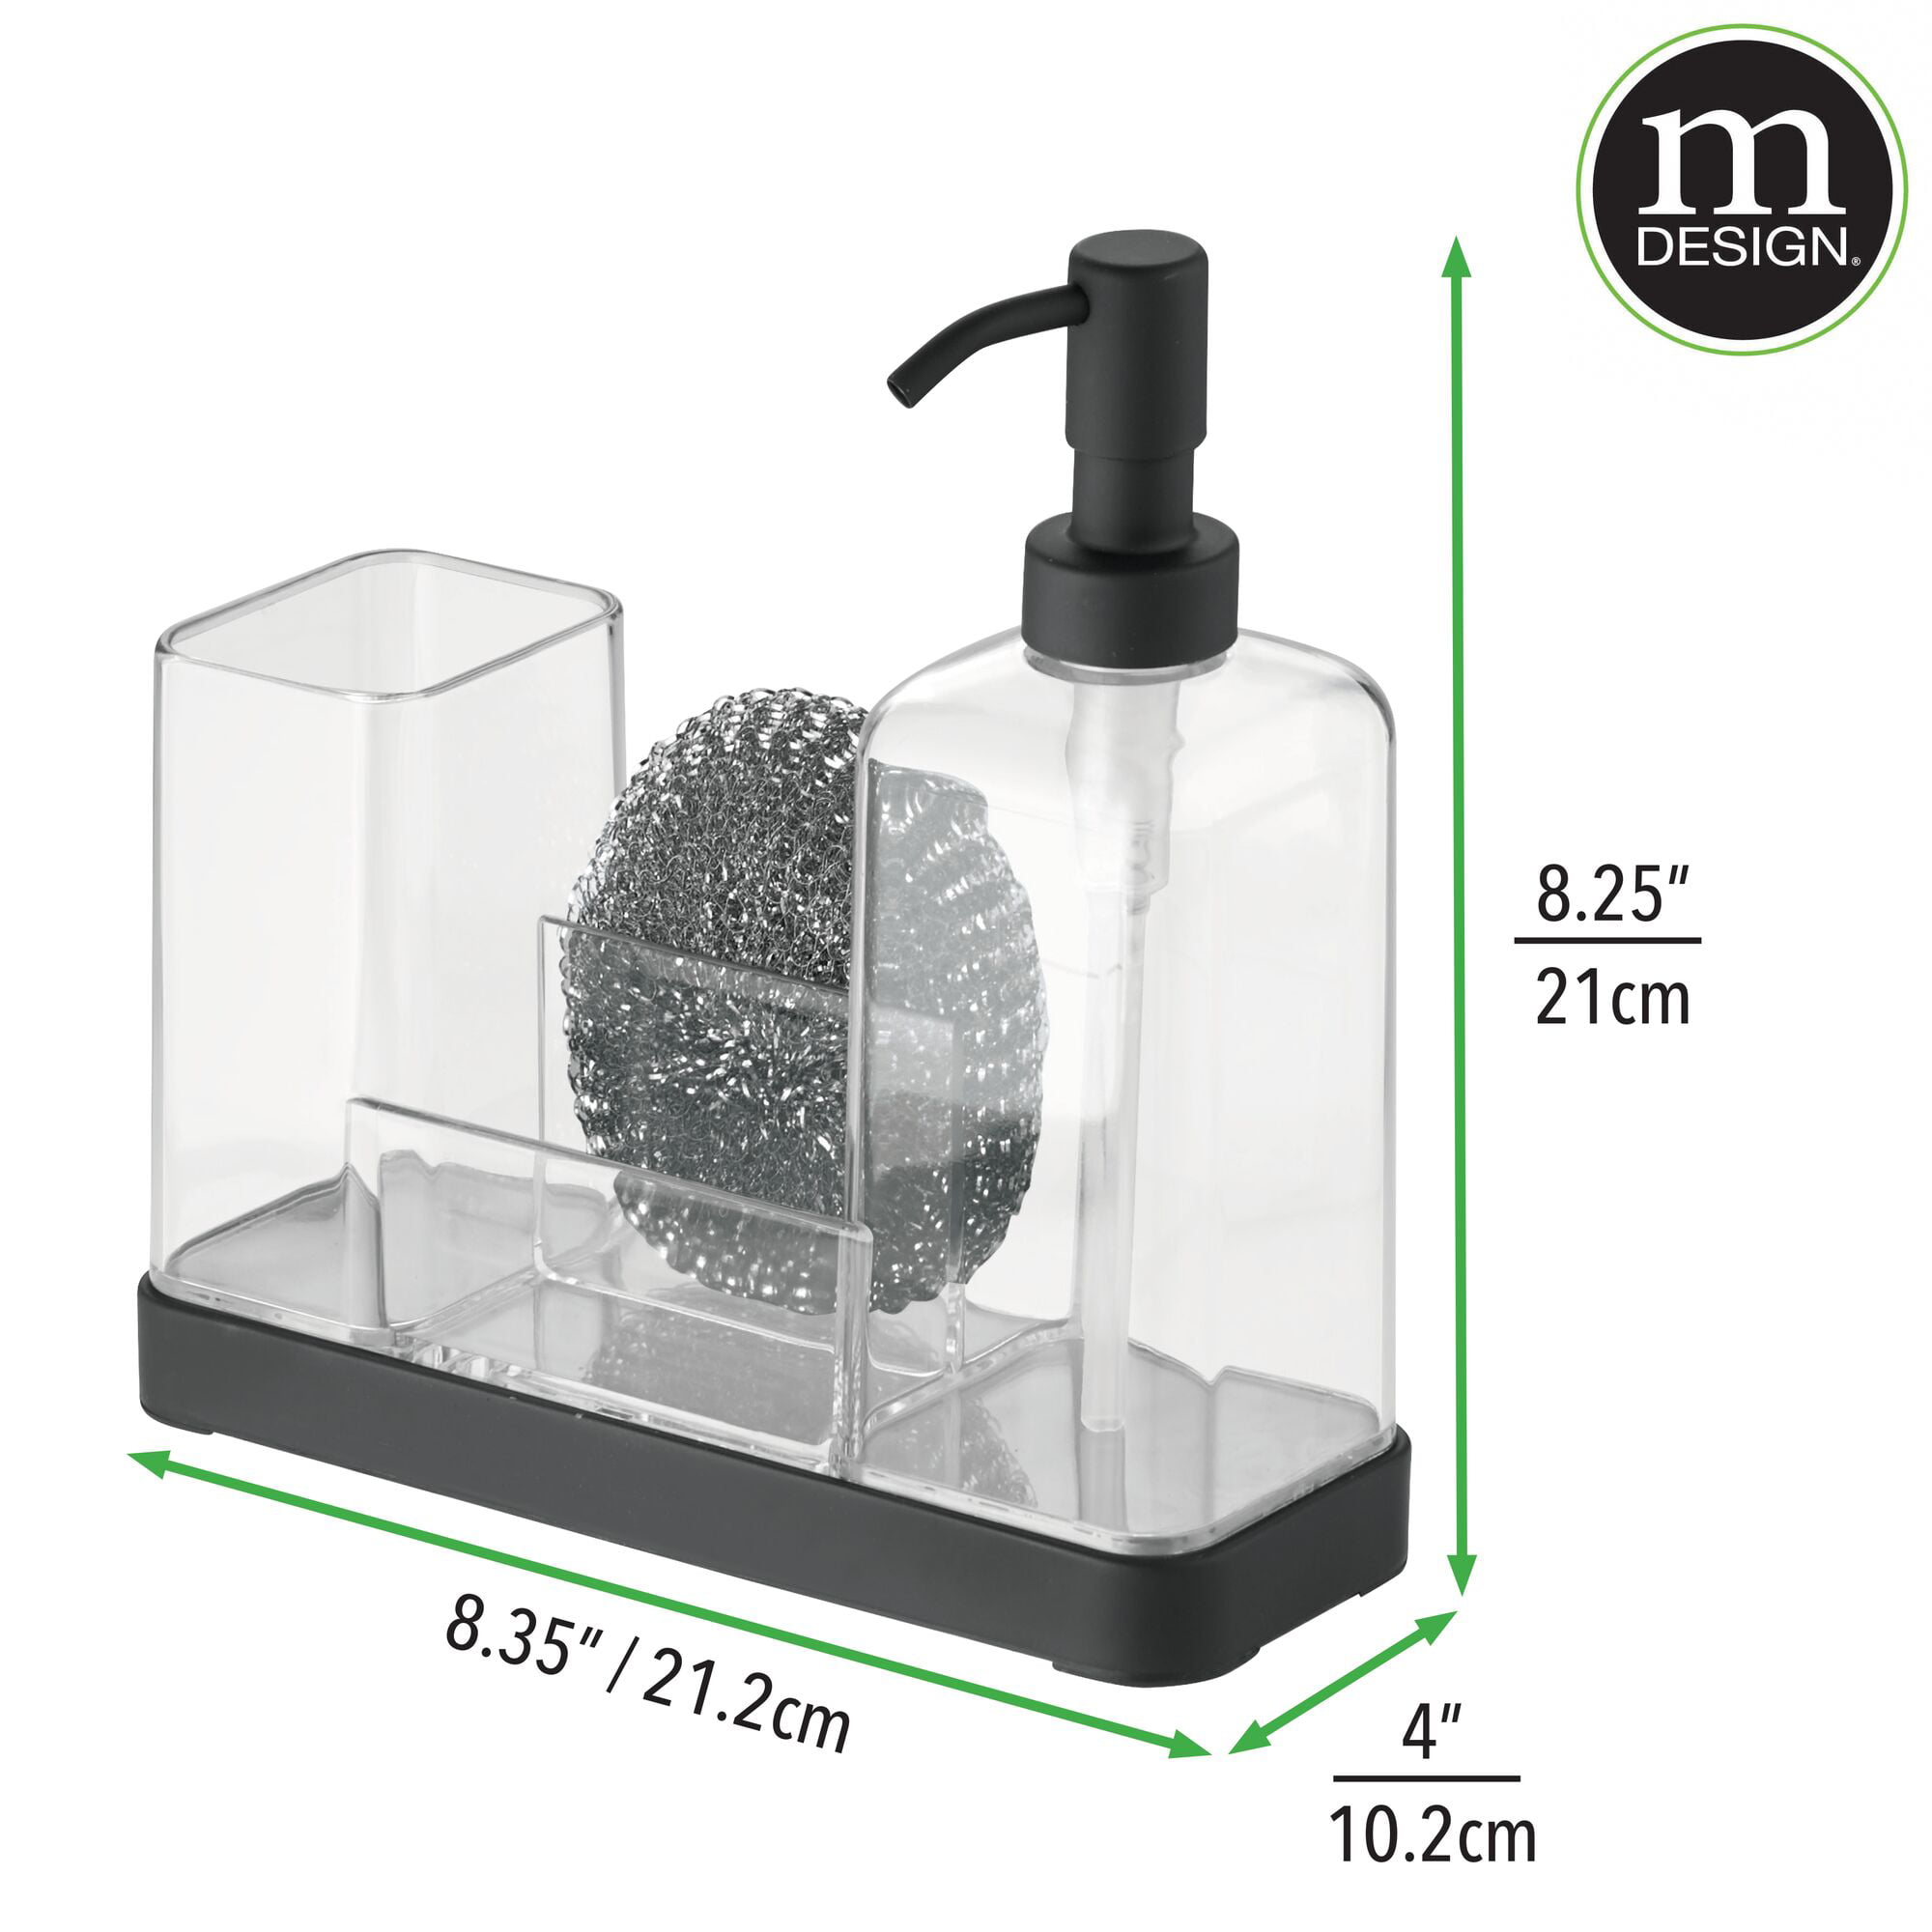 mDesign Plastic Kitchen Sink Countertop Liquid Hand Soap Dispenser, Chrome/Clear